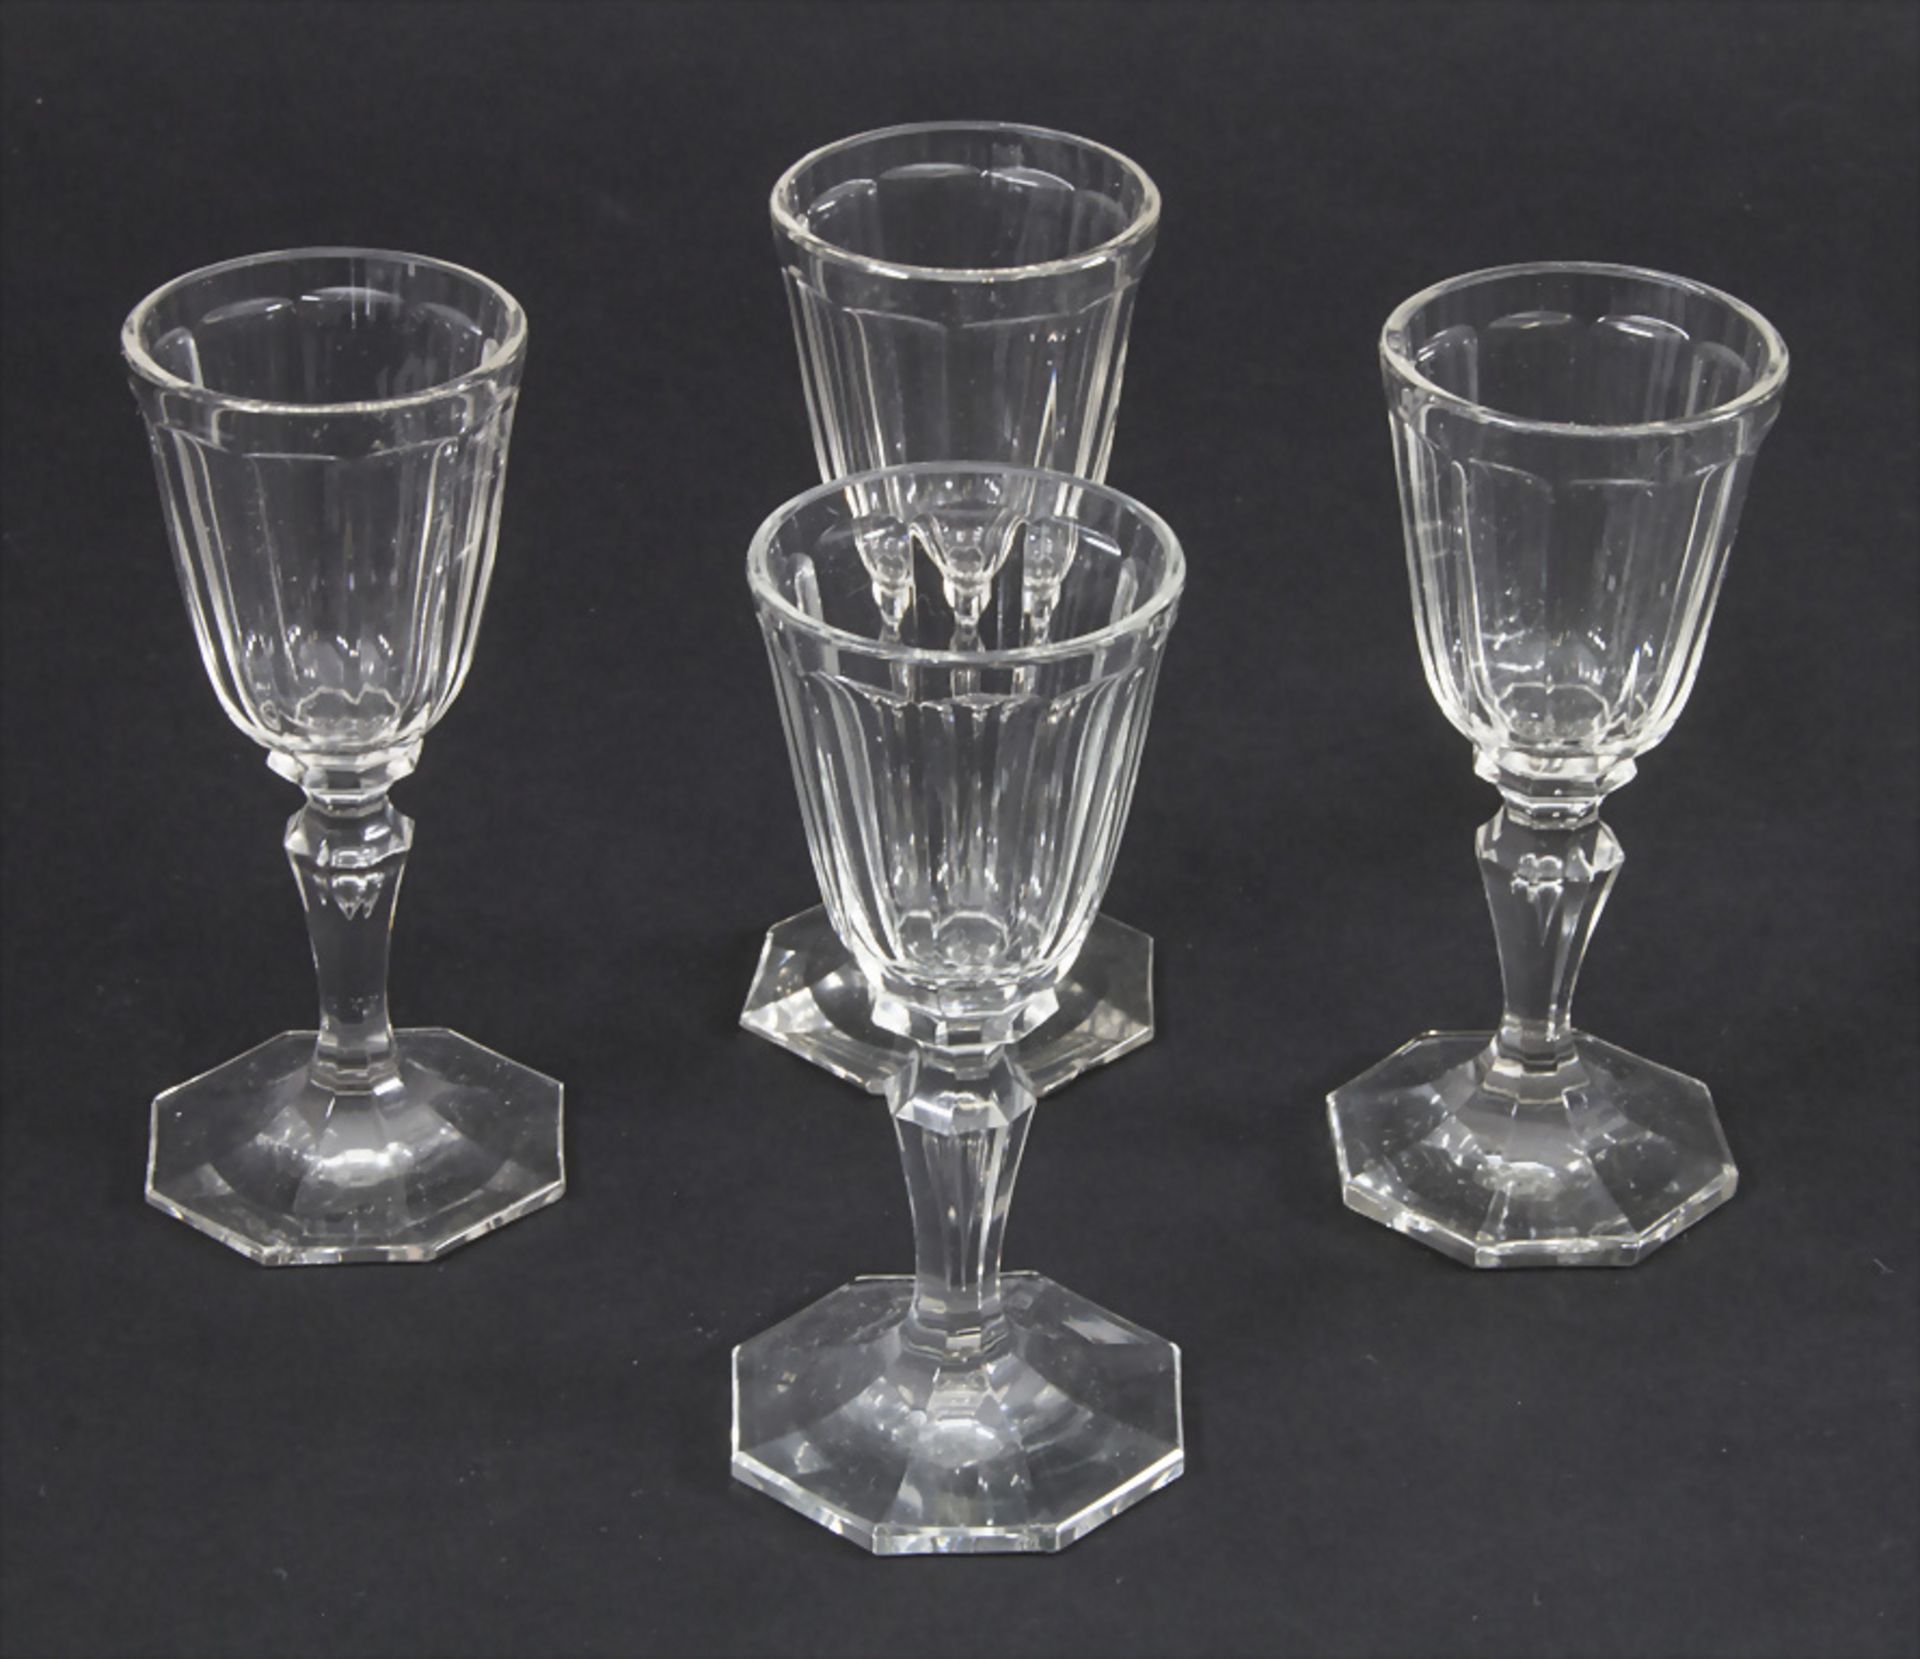 4 Schnapsgläser / 4 shot glasses, J. & L. Lobmeyr, Wien, um 1900